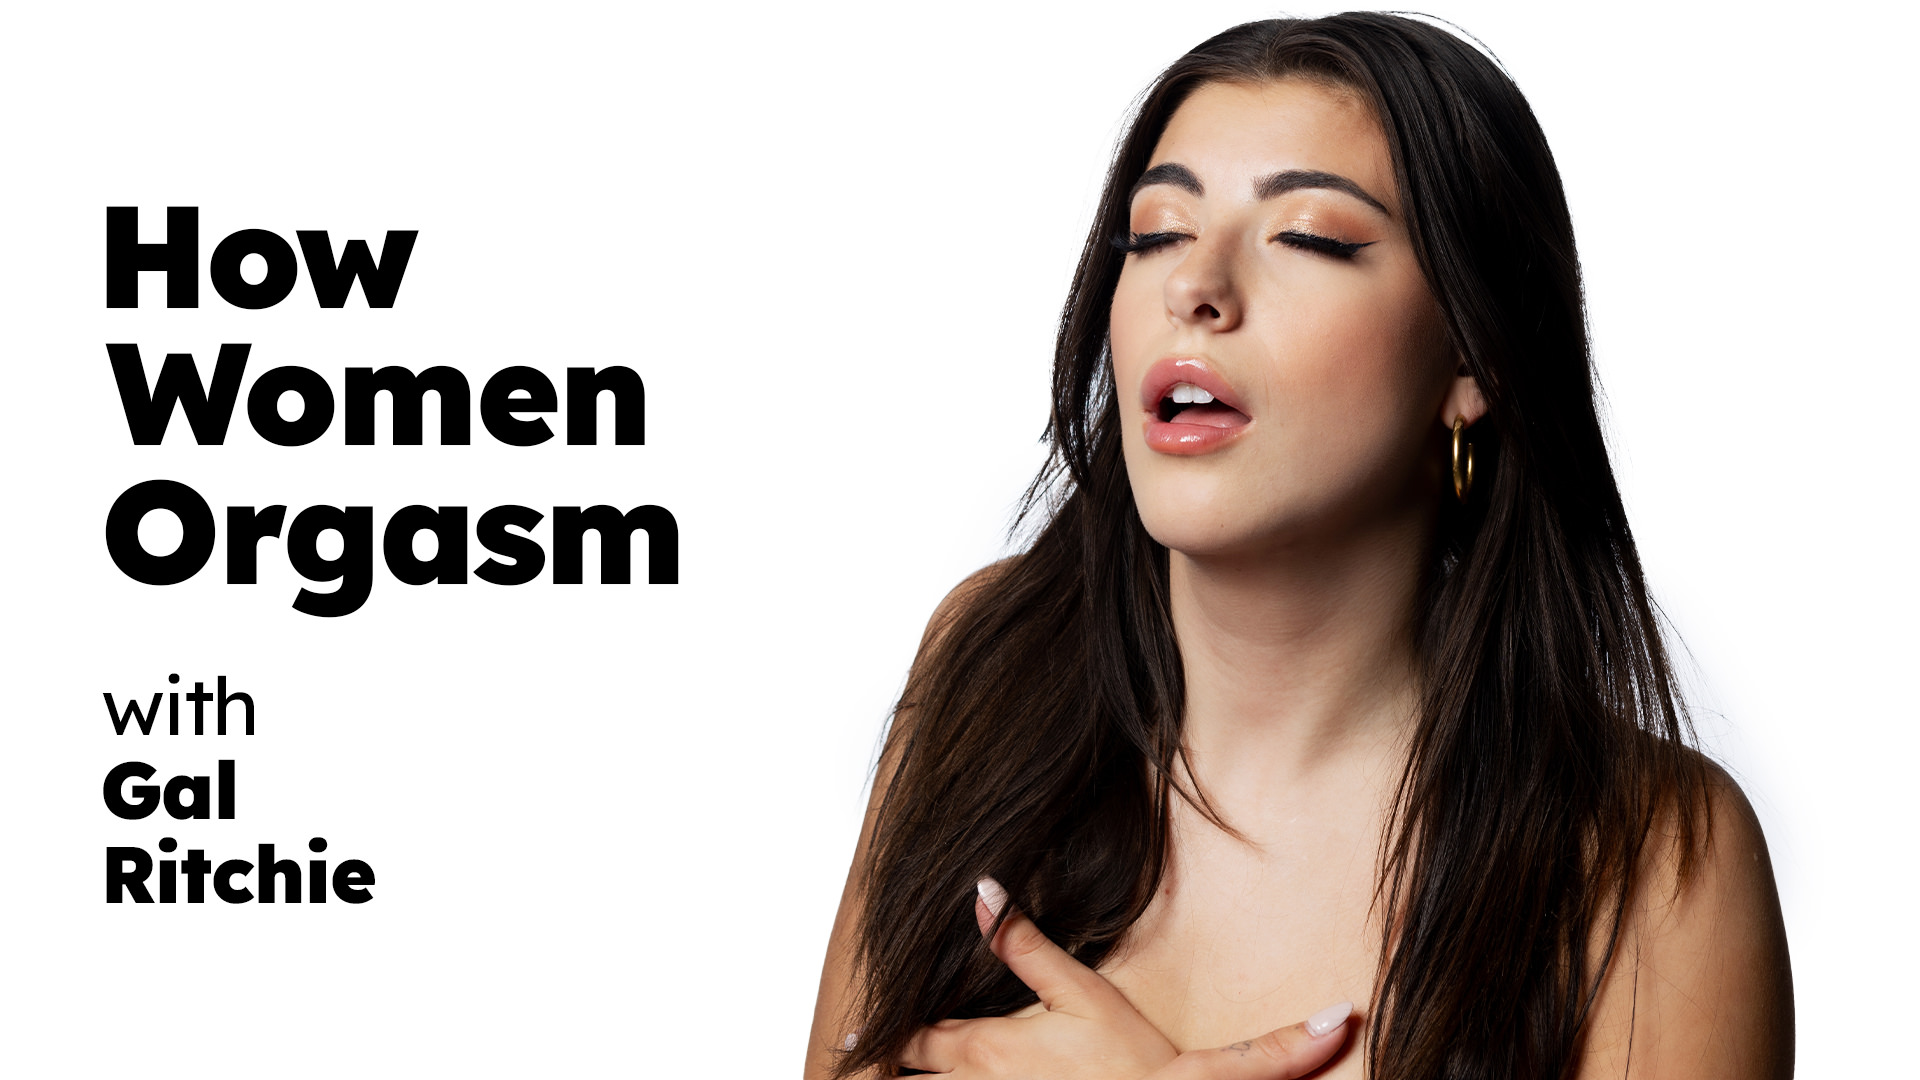 Gal Ritchie “How Women Orgasm – Gal Ritchie” UpClose